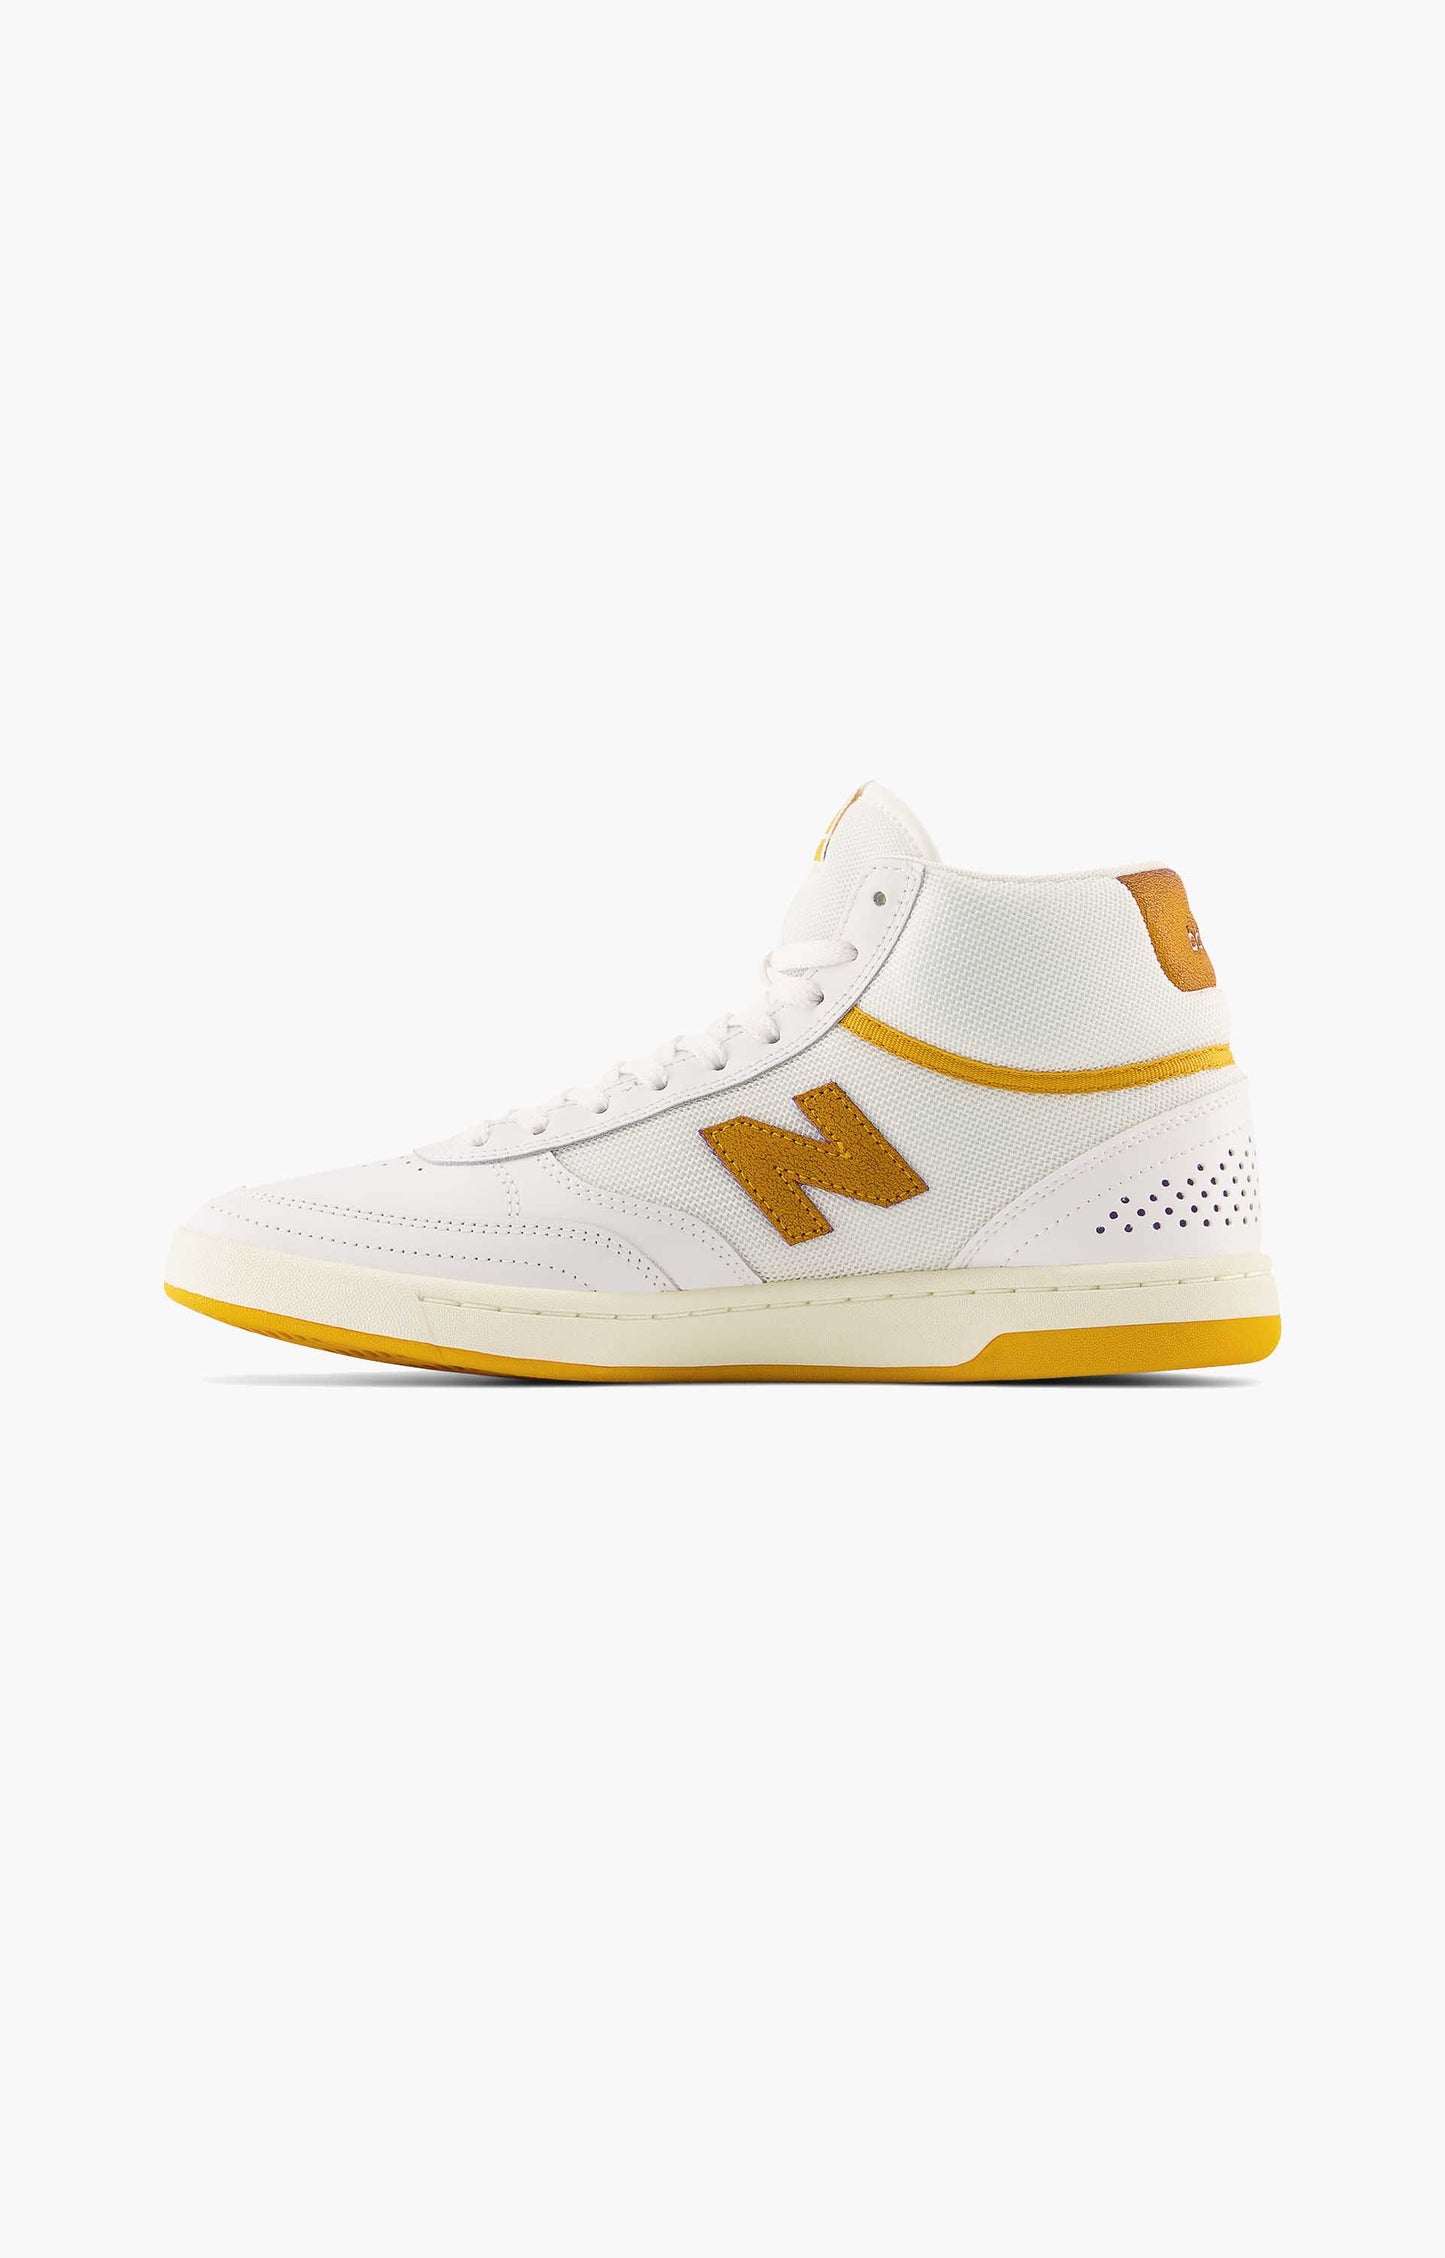 New Balance Numeric NM440HJR Shoe, White